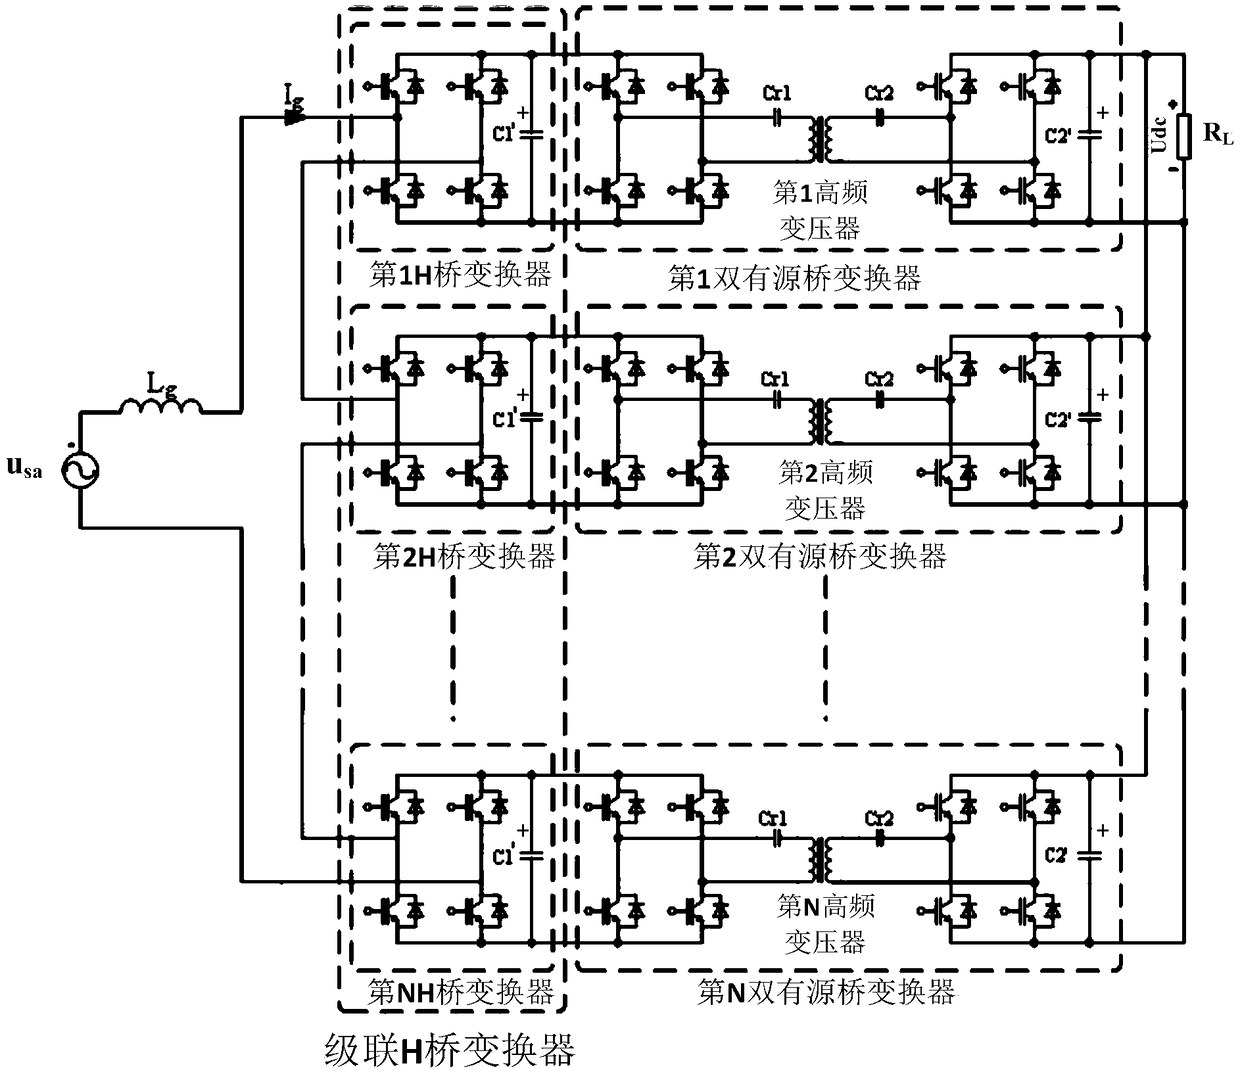 Large-signal simulation model of single-phase power electronic transformer